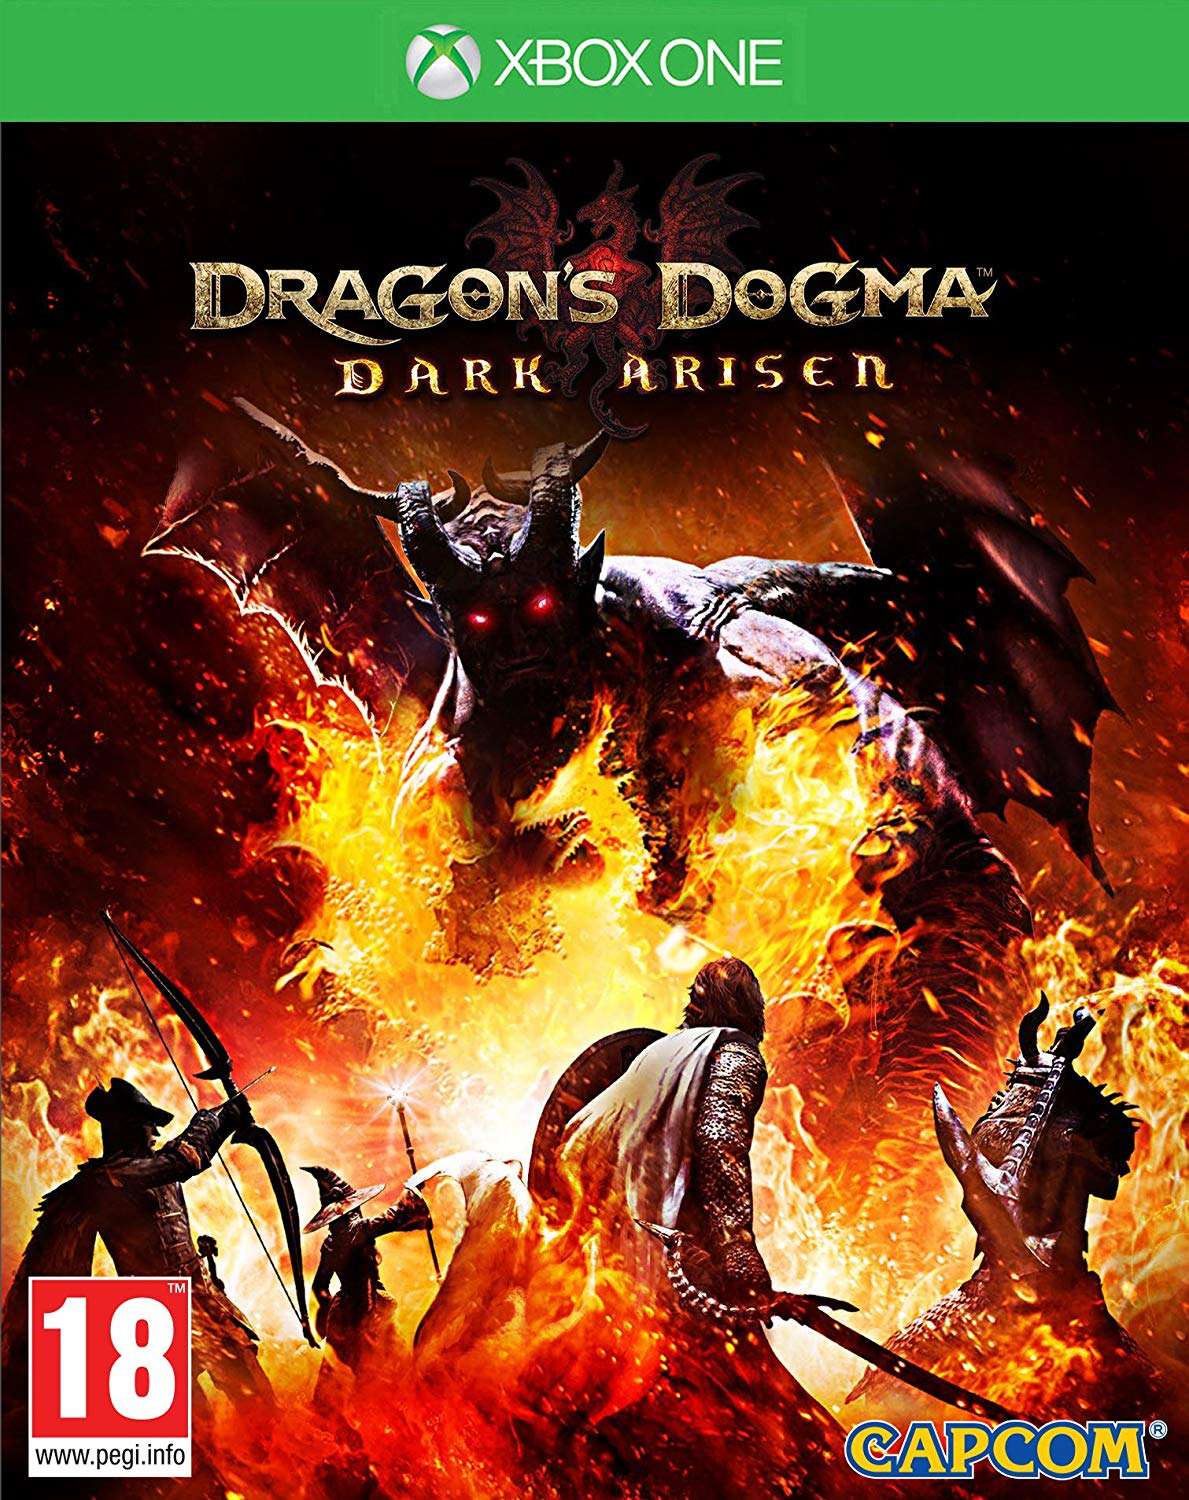 Dragons Dogma Dark Arisen for XBOXONE to buy